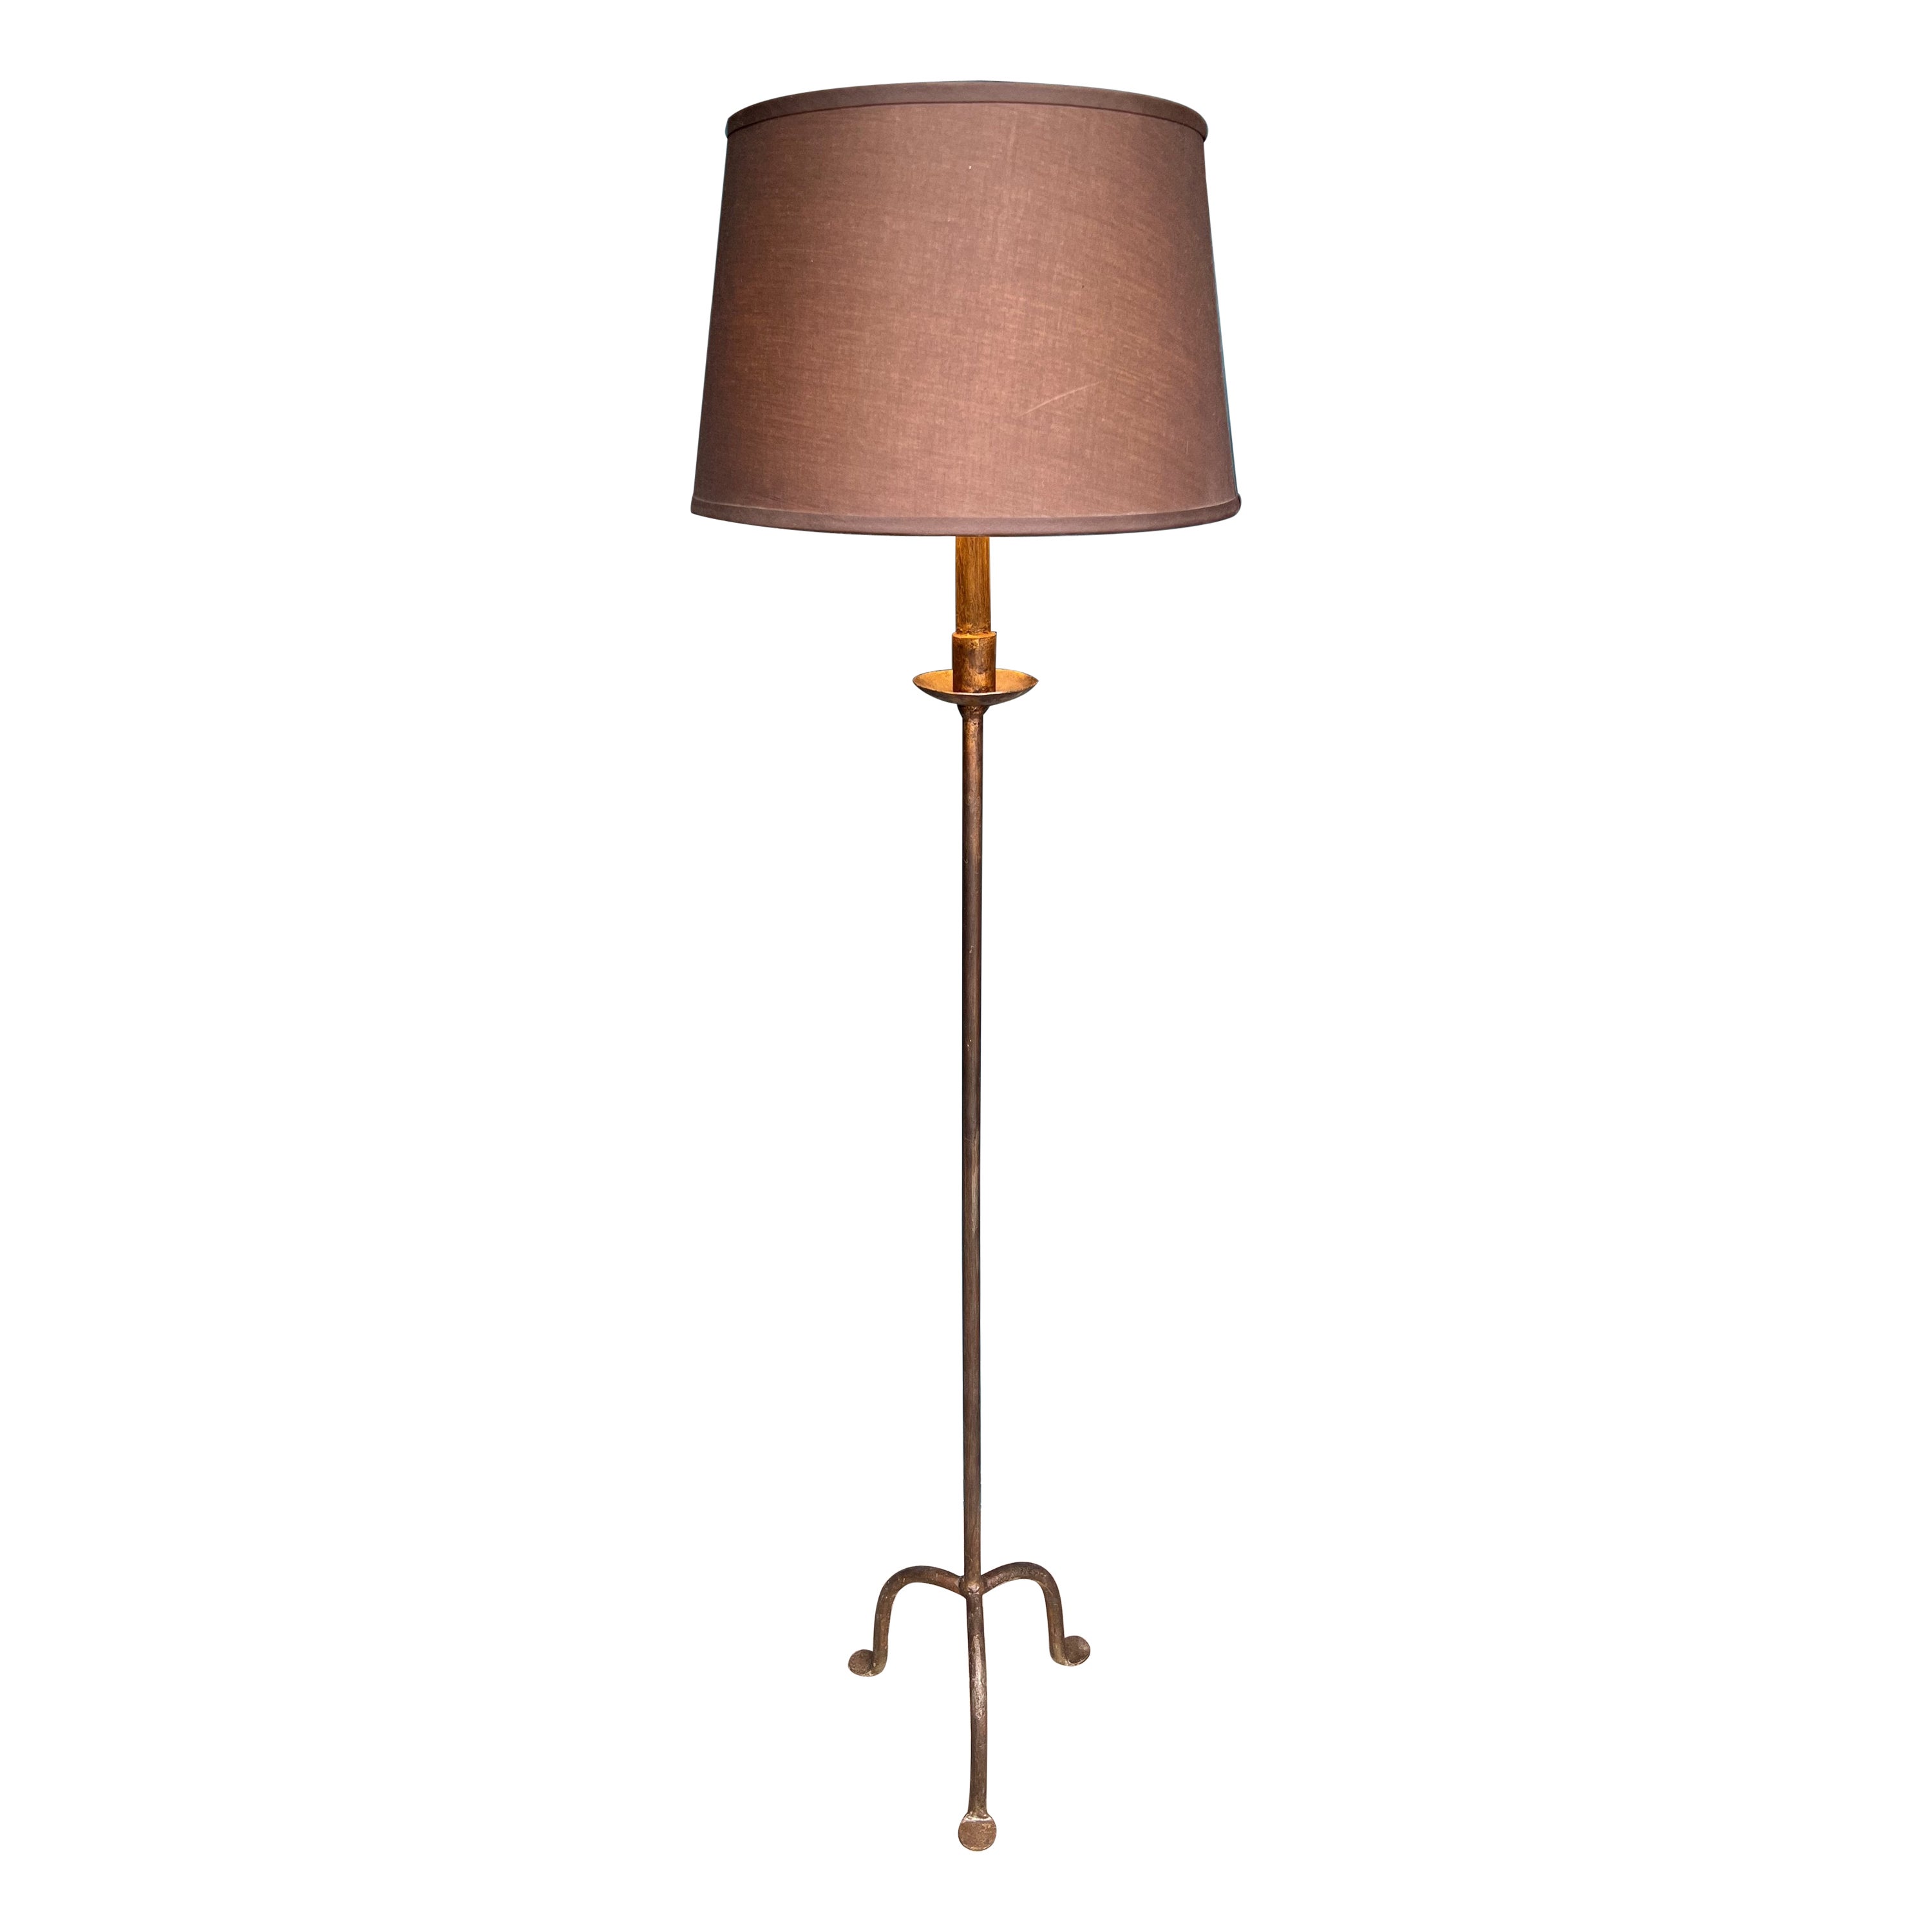 Spanish 1950s Wrought Iron Floor Lamp For Sale